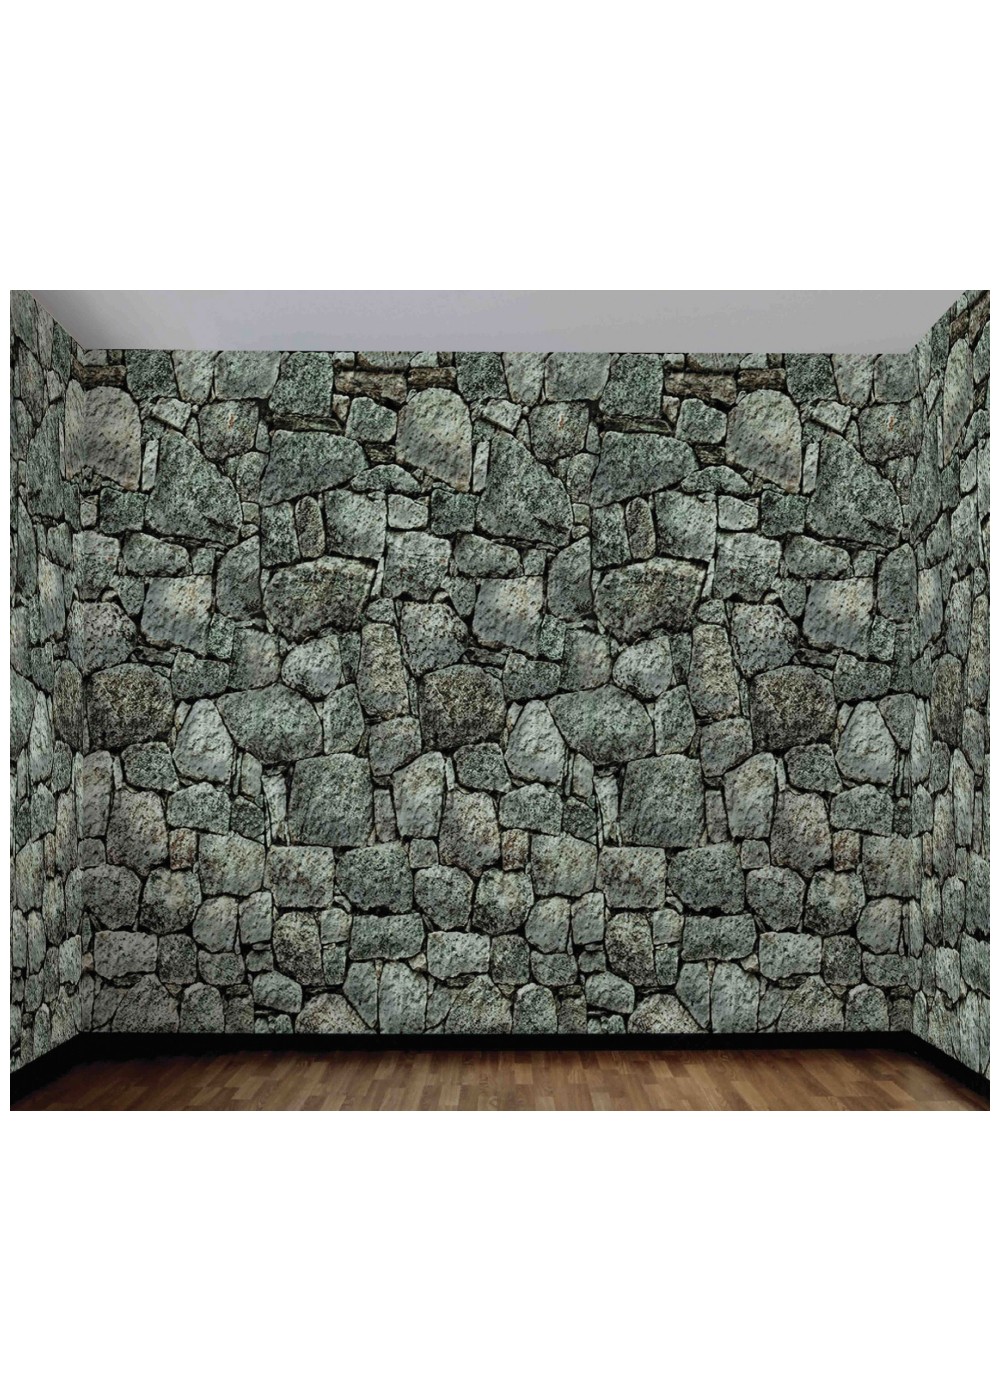 20 X 4 Stone Wall Roll